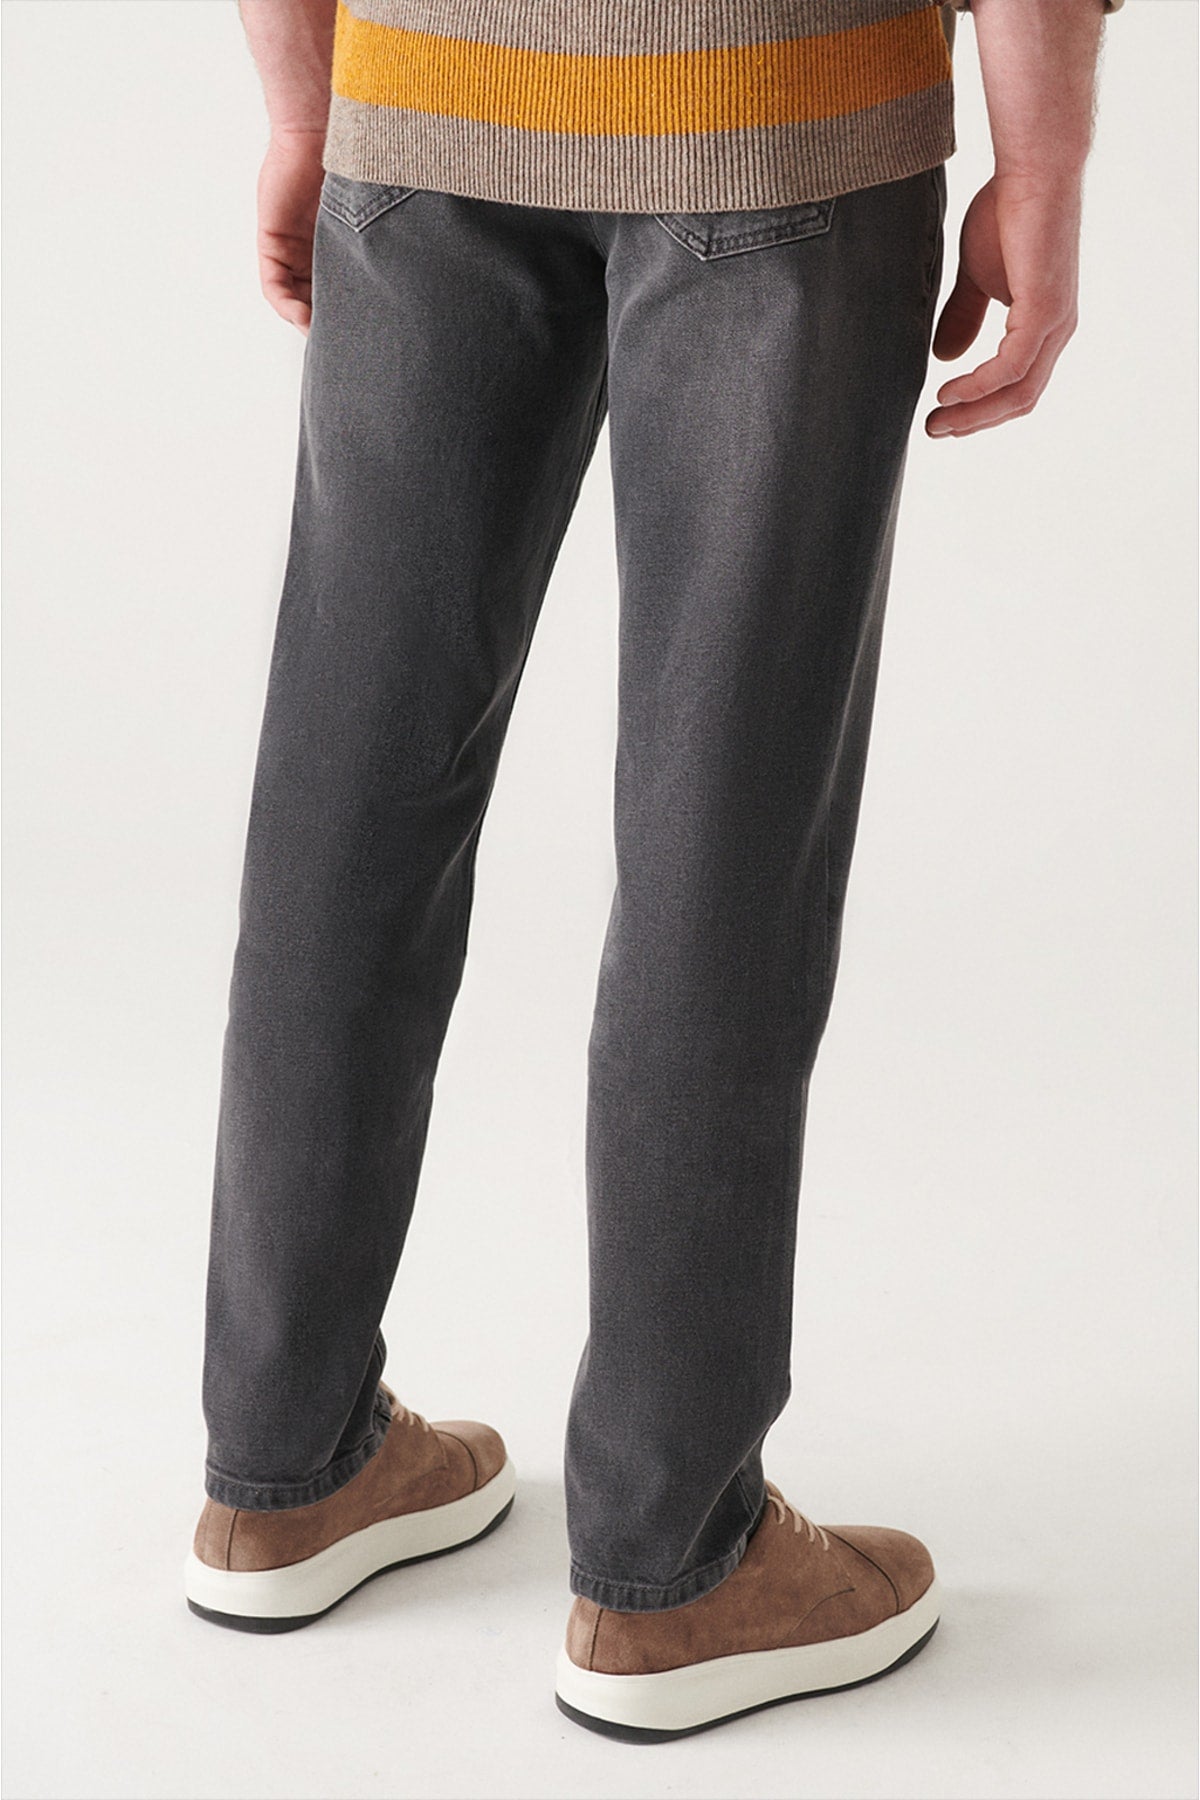 Men's Black Regular Fit Jean Pants A22y3506